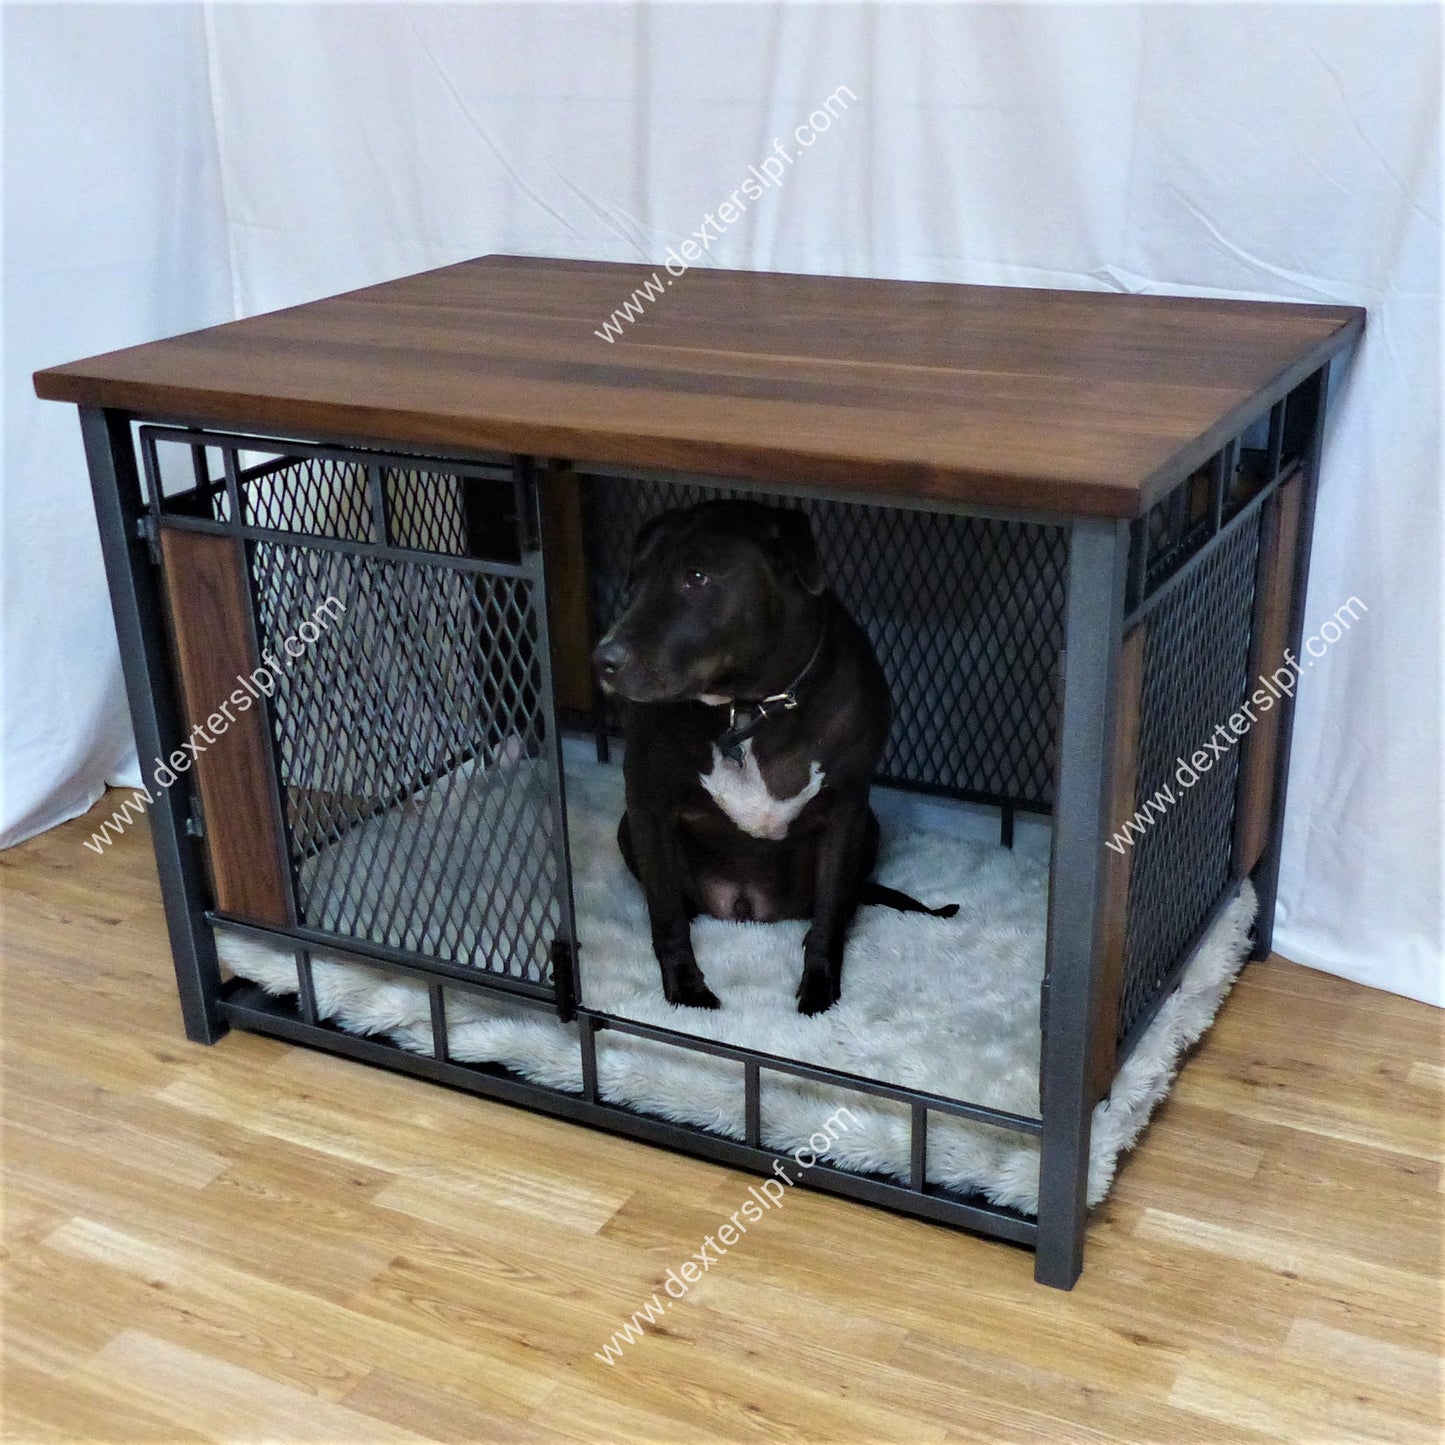 Raven X-Large Dog Crate Furniture, Modern Dog Crate, Dog Crate Furniture, Dog Kennel Furniture